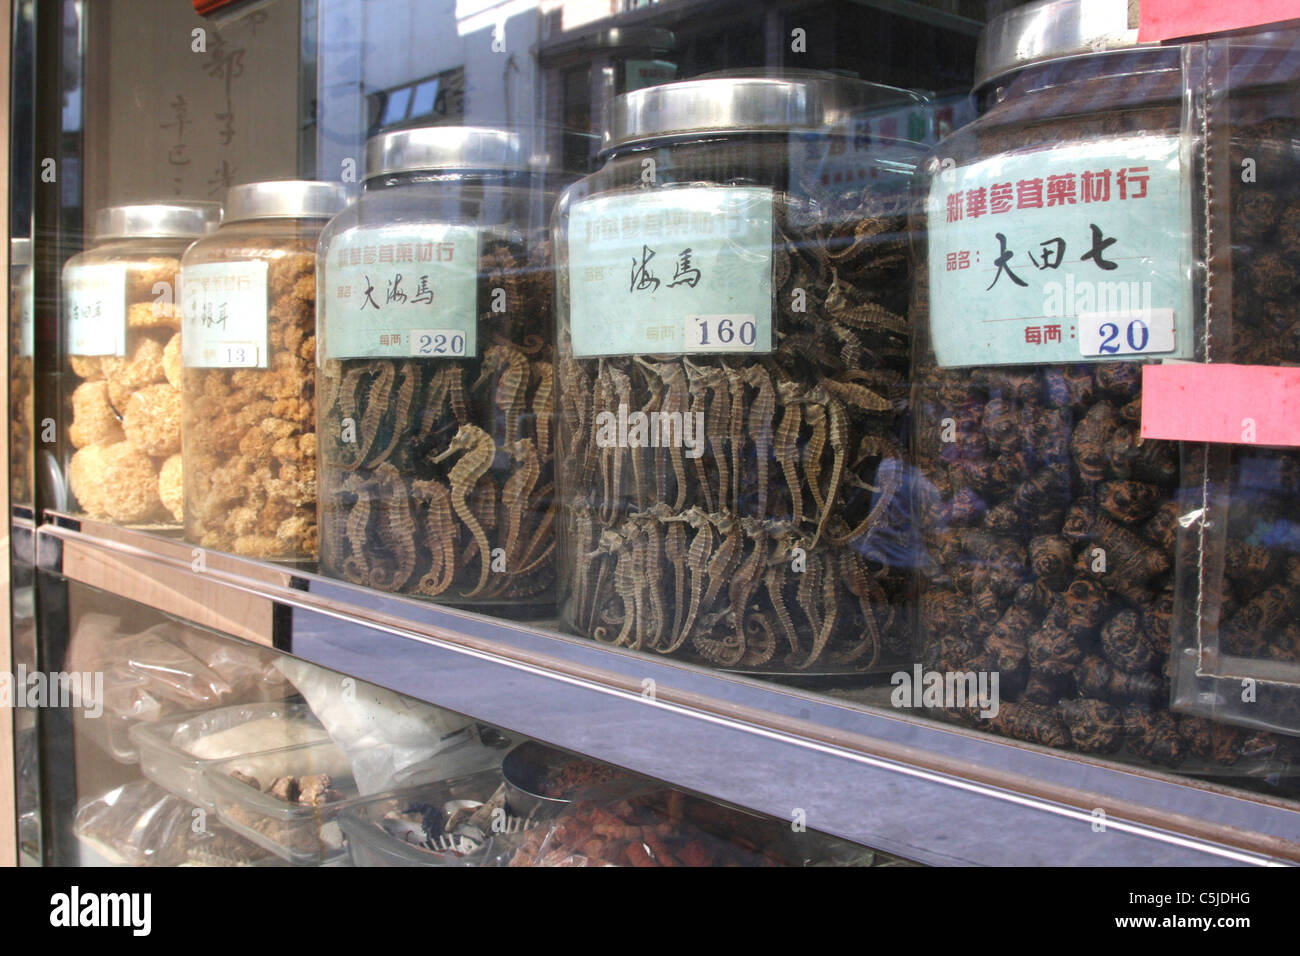 Les hippocampes séchés, pharmacie Cheung Chao, Hong Kong Banque D'Images